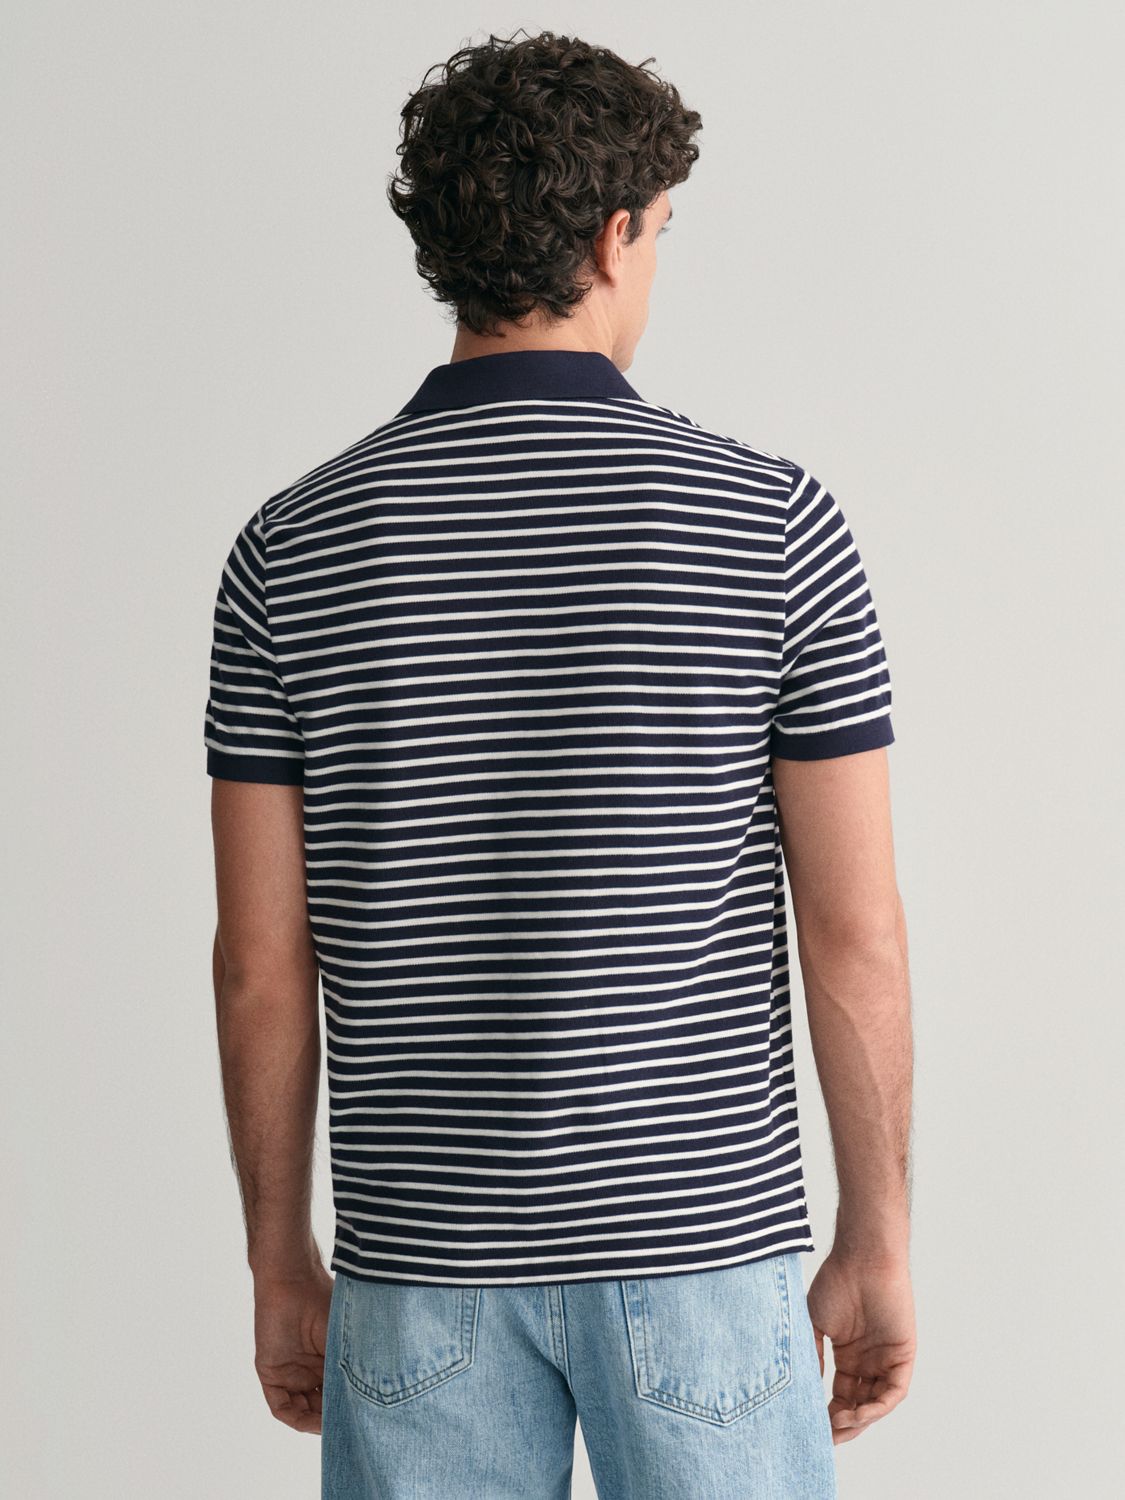 GANT Striped Short Sleeve Pique Polo Shirt, Blue/White, S